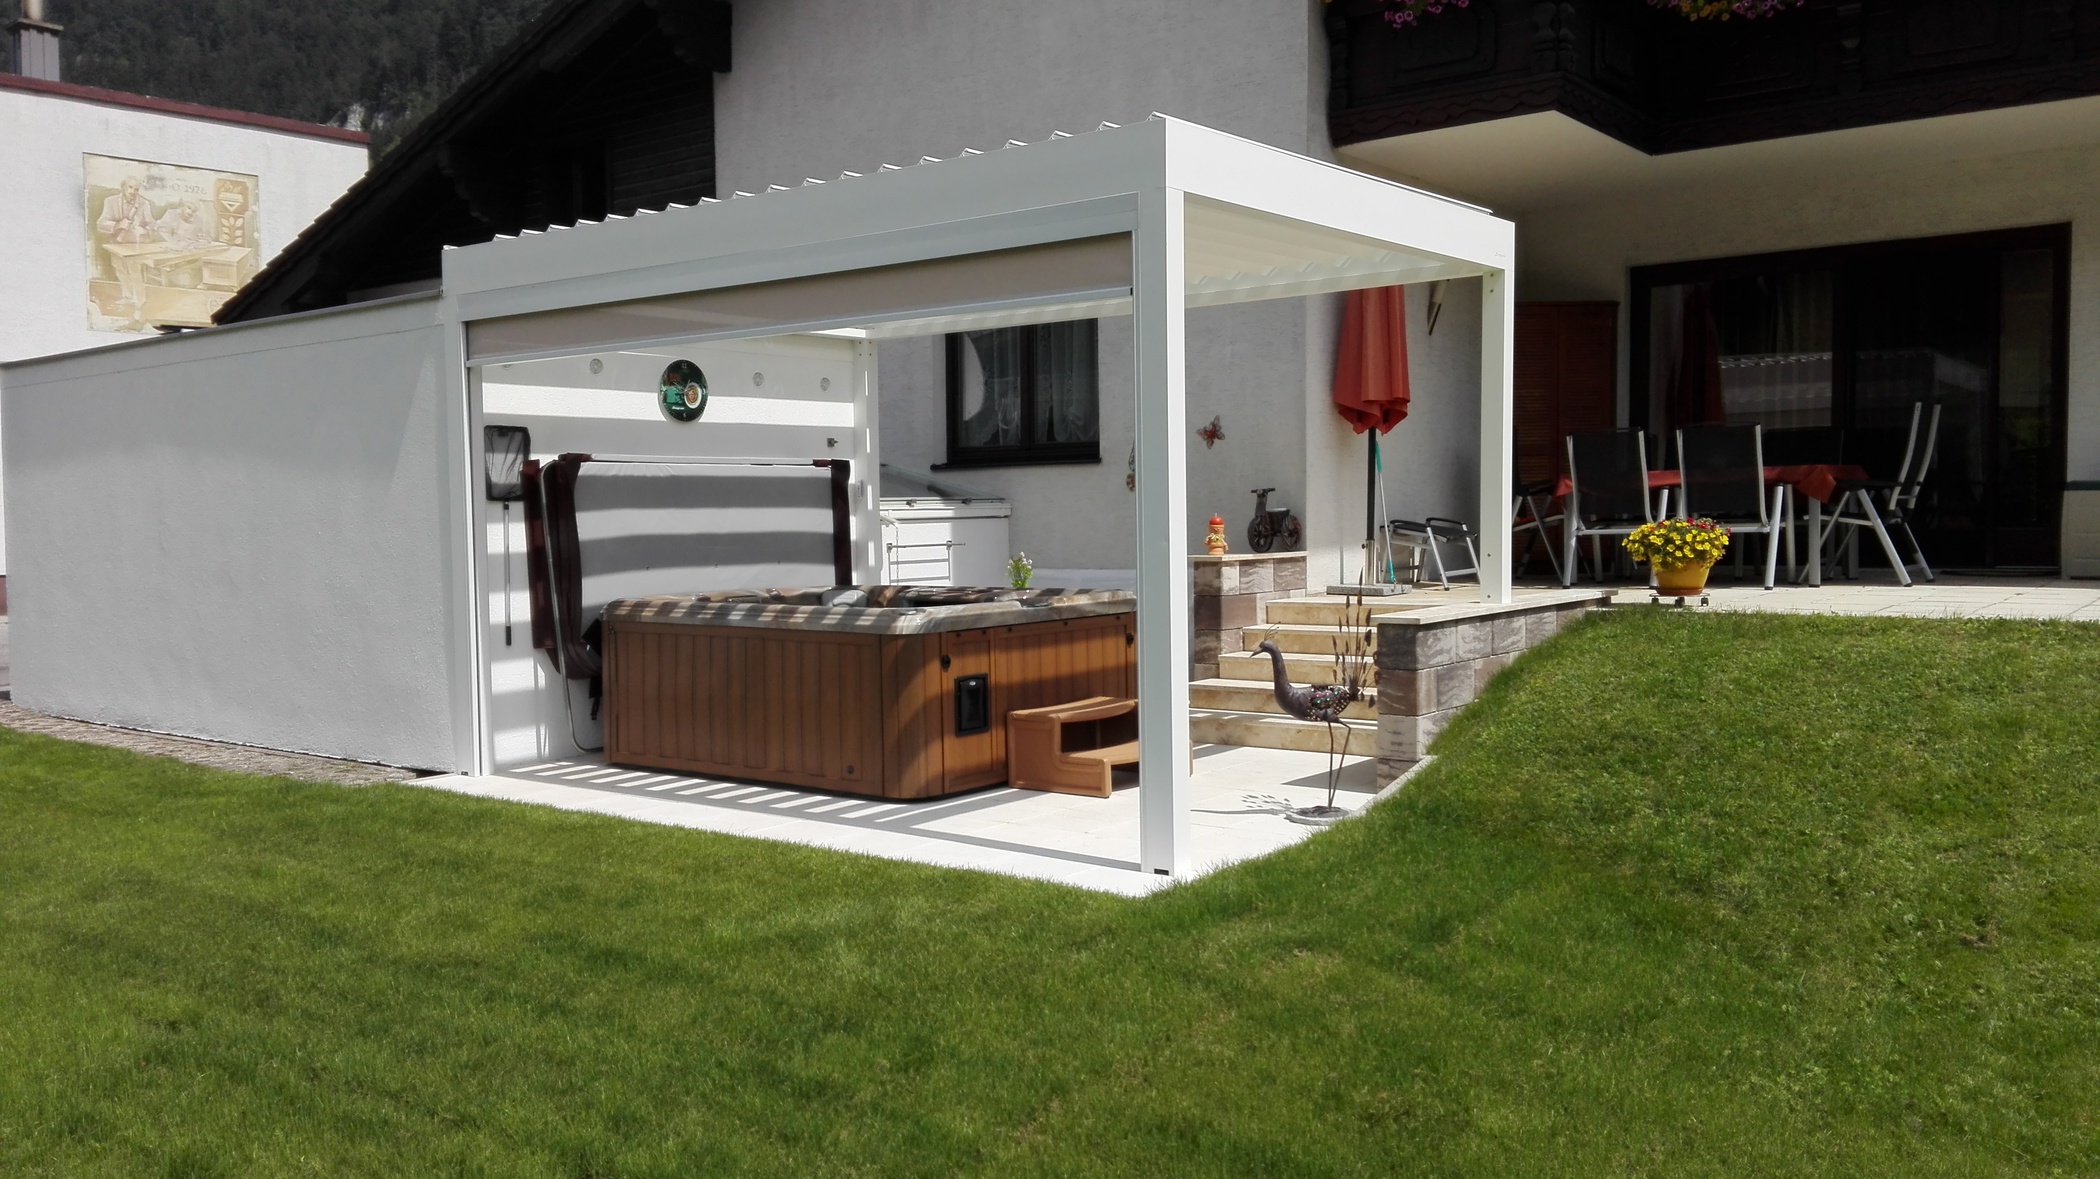 15 Hot Tub Deck Ideas for a Relaxing Backyard - Bob Vila